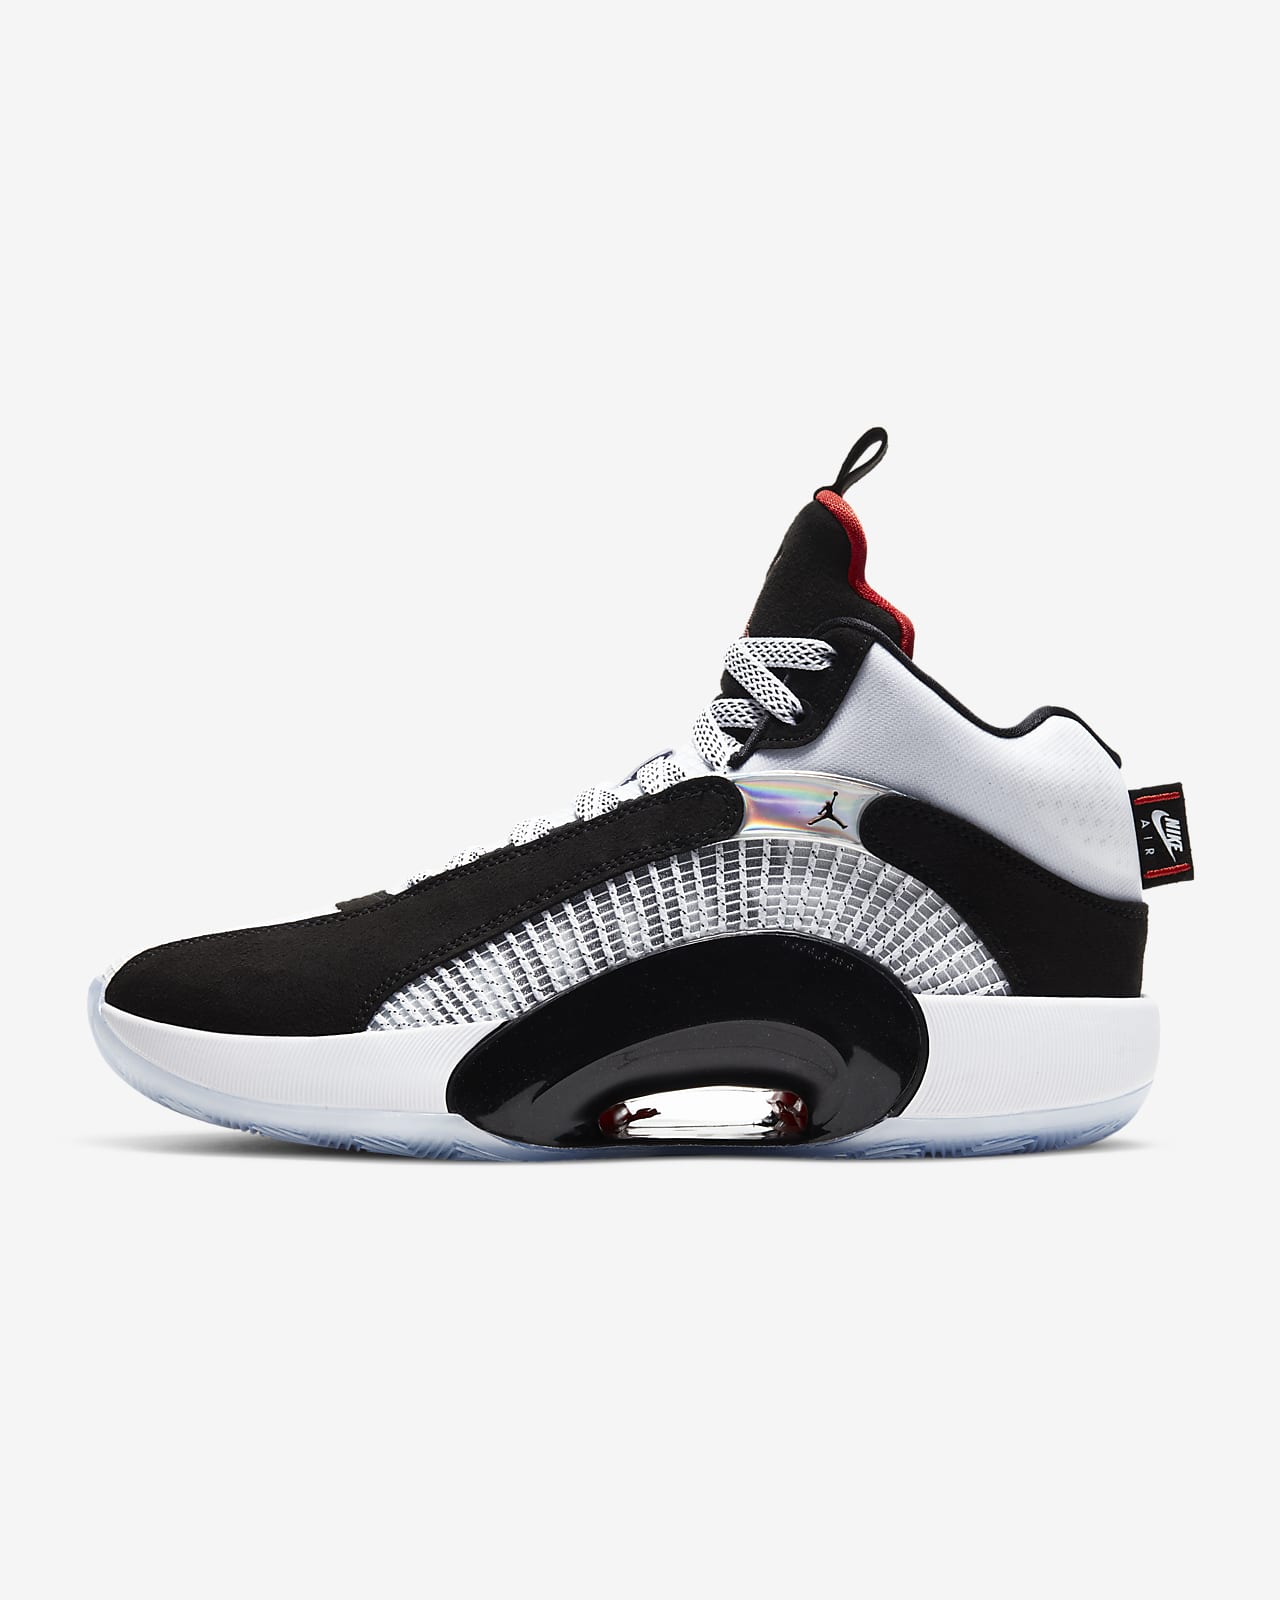 Air Jordan XXXV “DNA”. Nike 